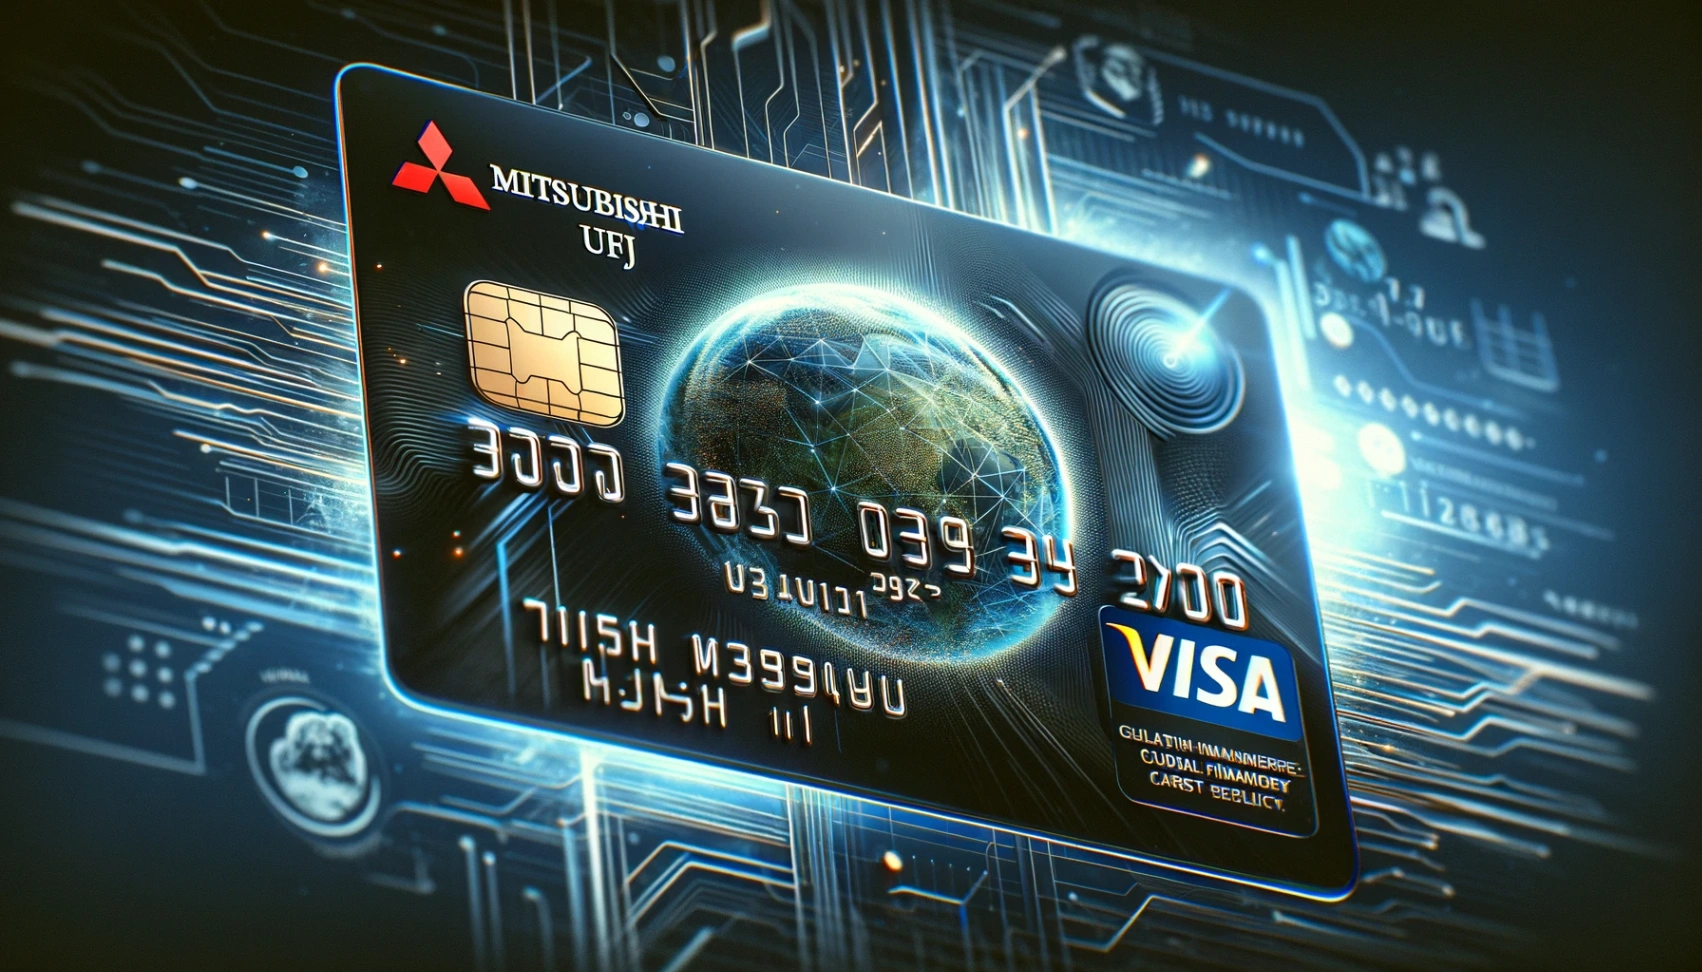 Mitsubishi UFJ-VISA Card – Learn the Benefits and How to Apply